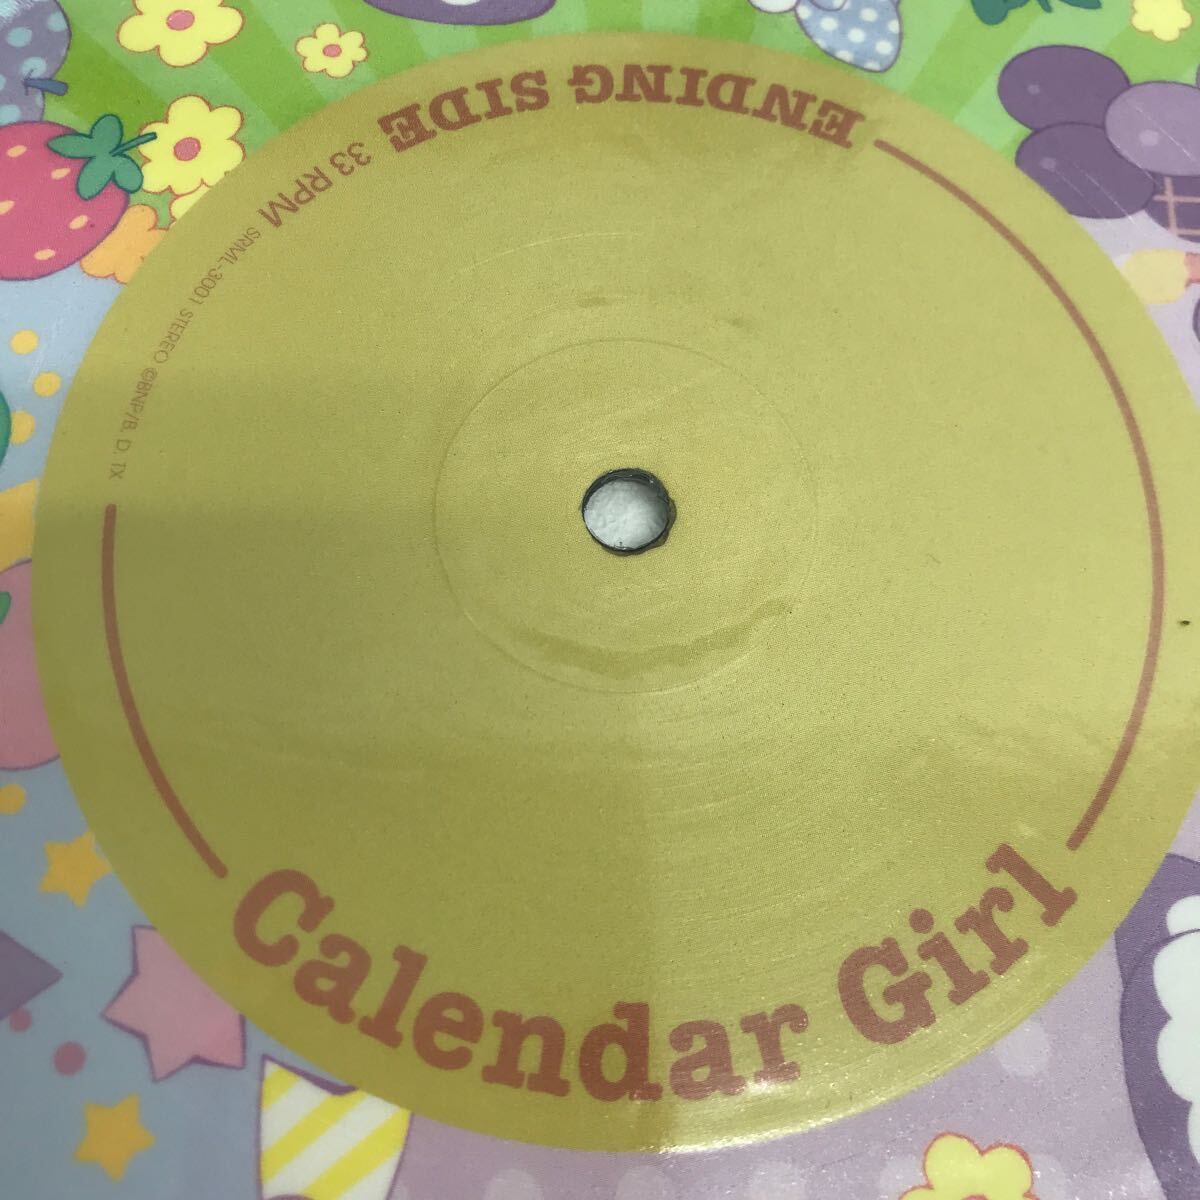 I0509A3 Aikatsu! календарь девушка Calendar Girl LP запись музыка аниме SRML-3001 Picture запись /.. белка более того STAR ANIS